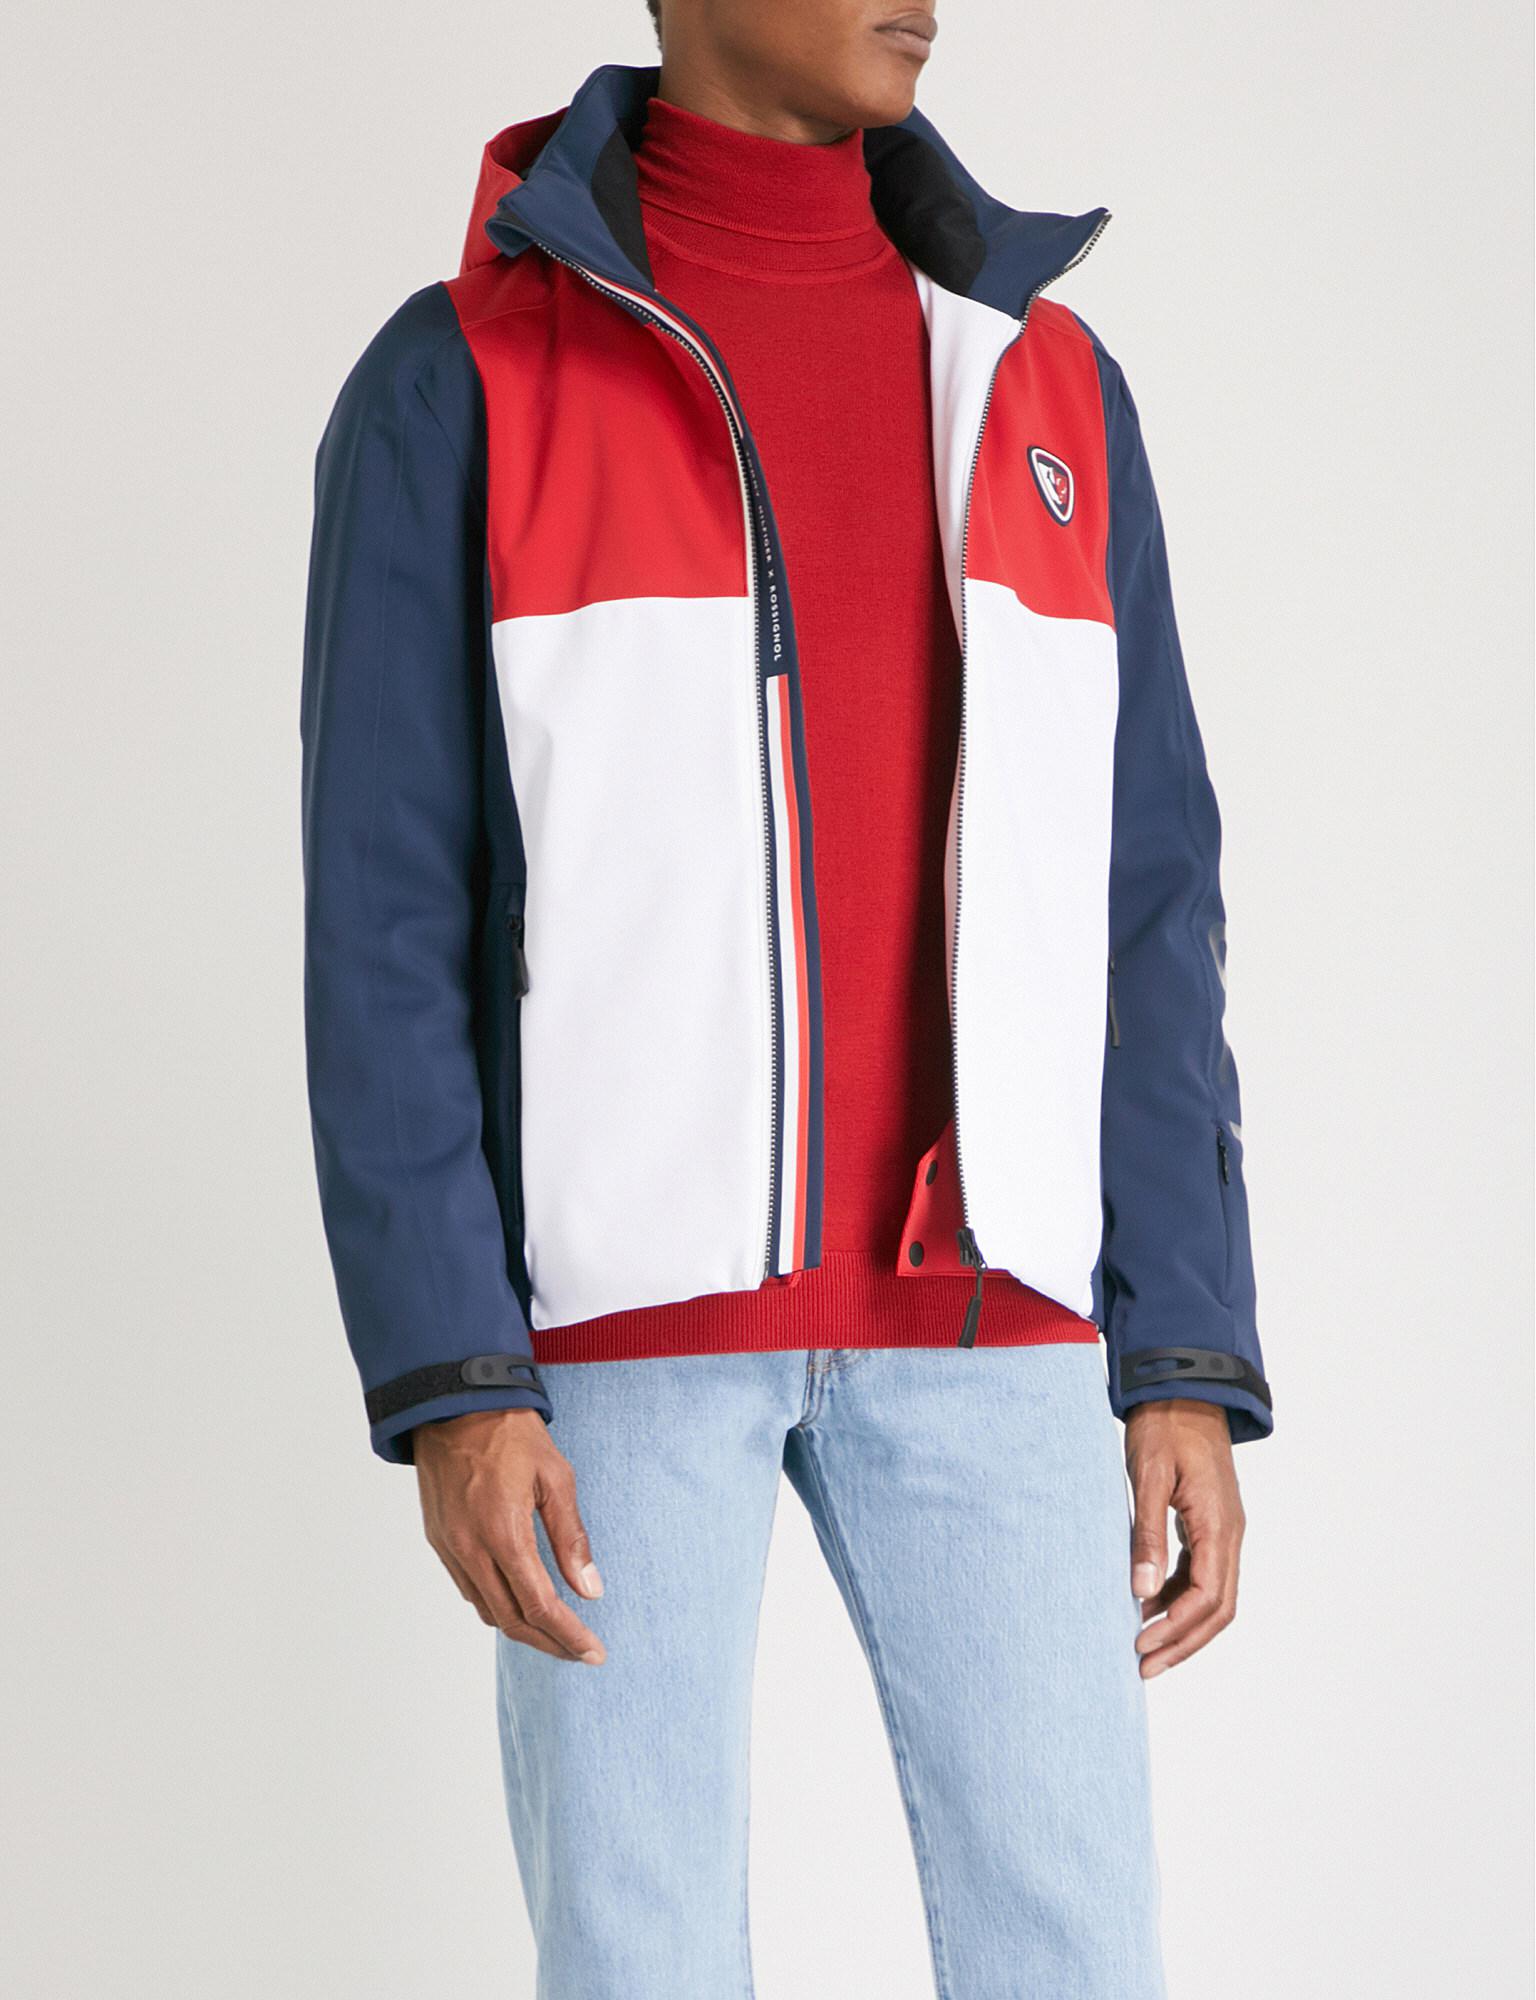 hilfiger ski jacket